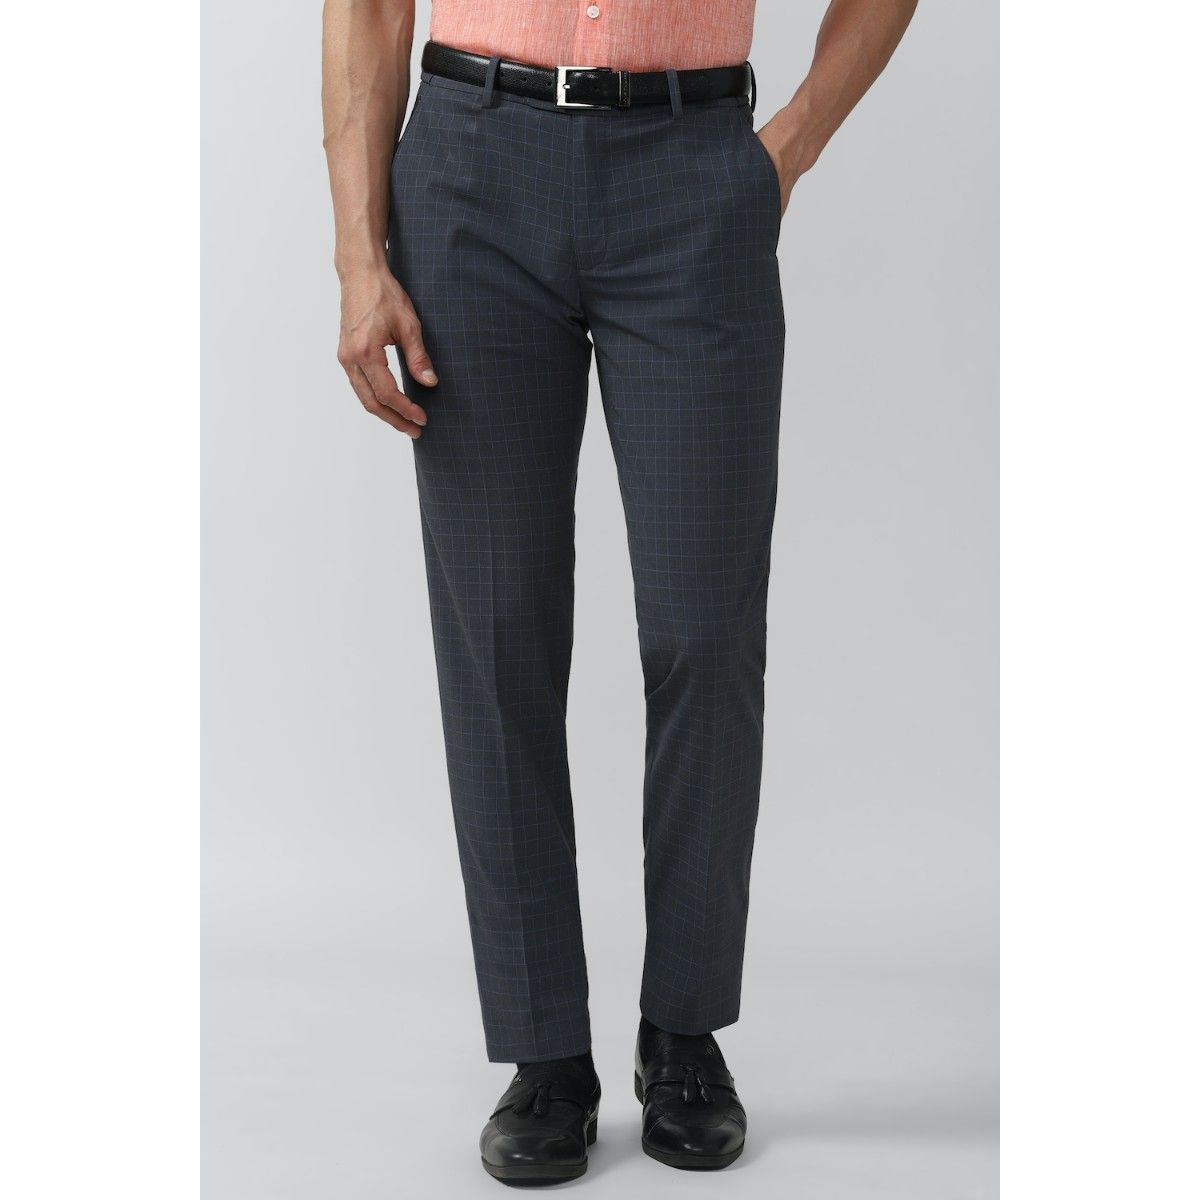 Buy Men Black Solid Slim Fit Formal Trousers Online - 760113 | Peter England